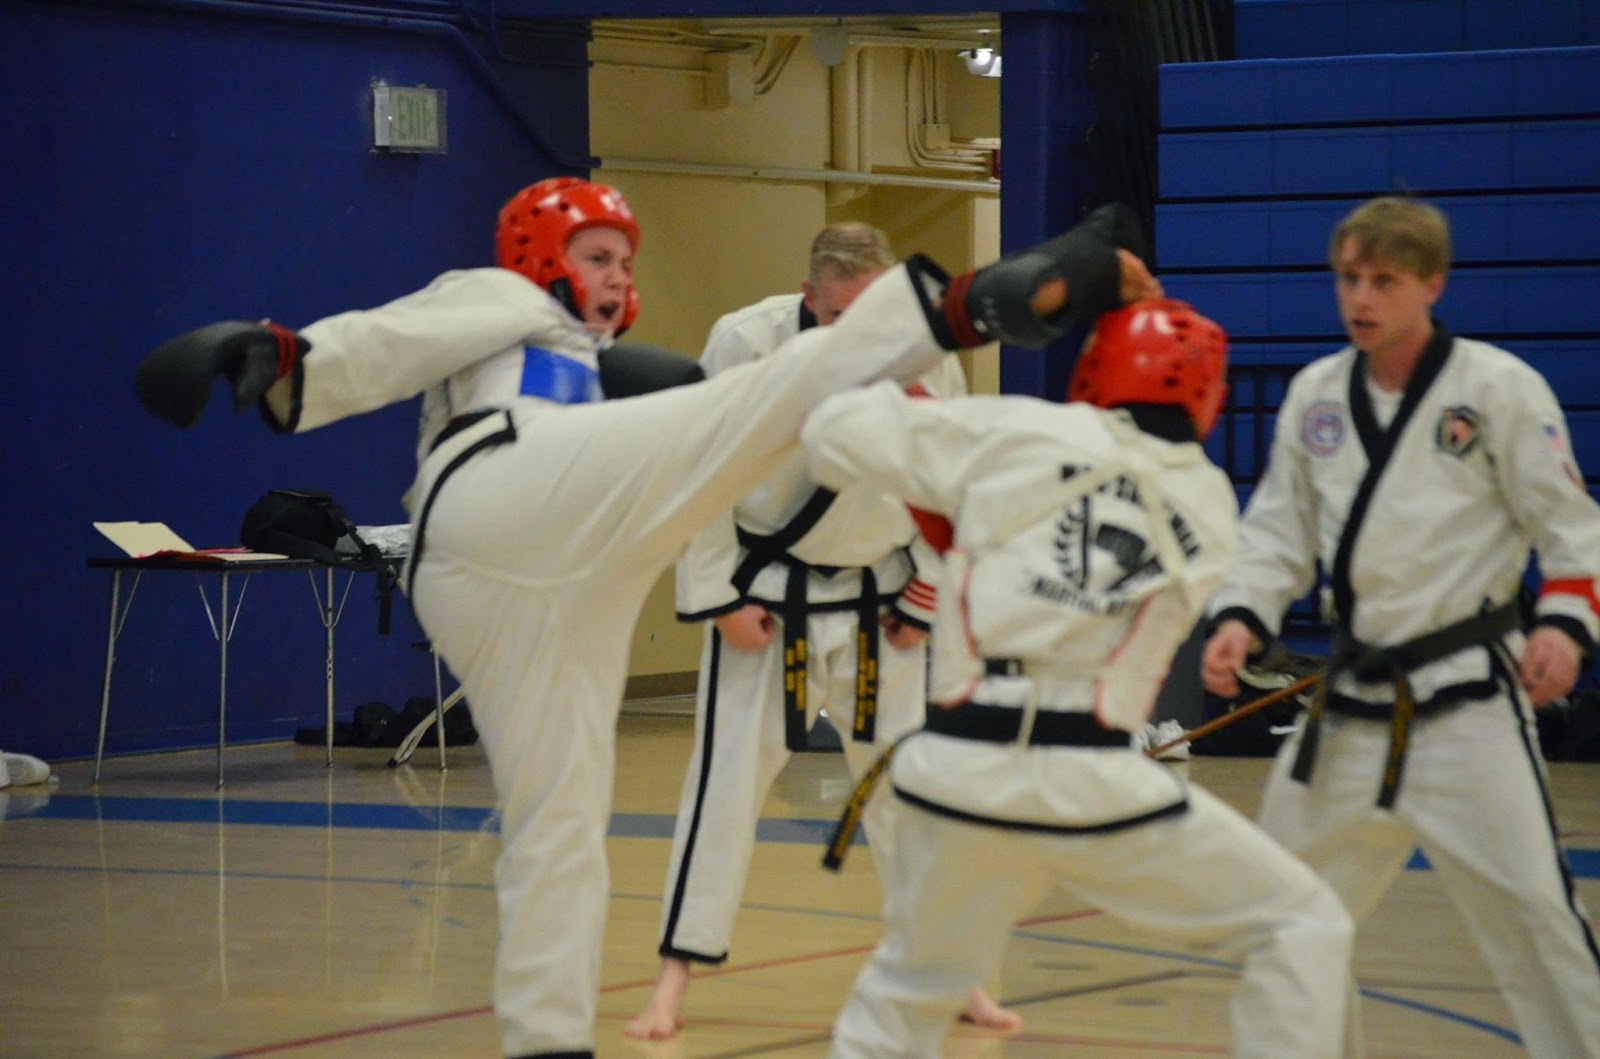 Taekwondo martial arts black belt sparring with a hook kick